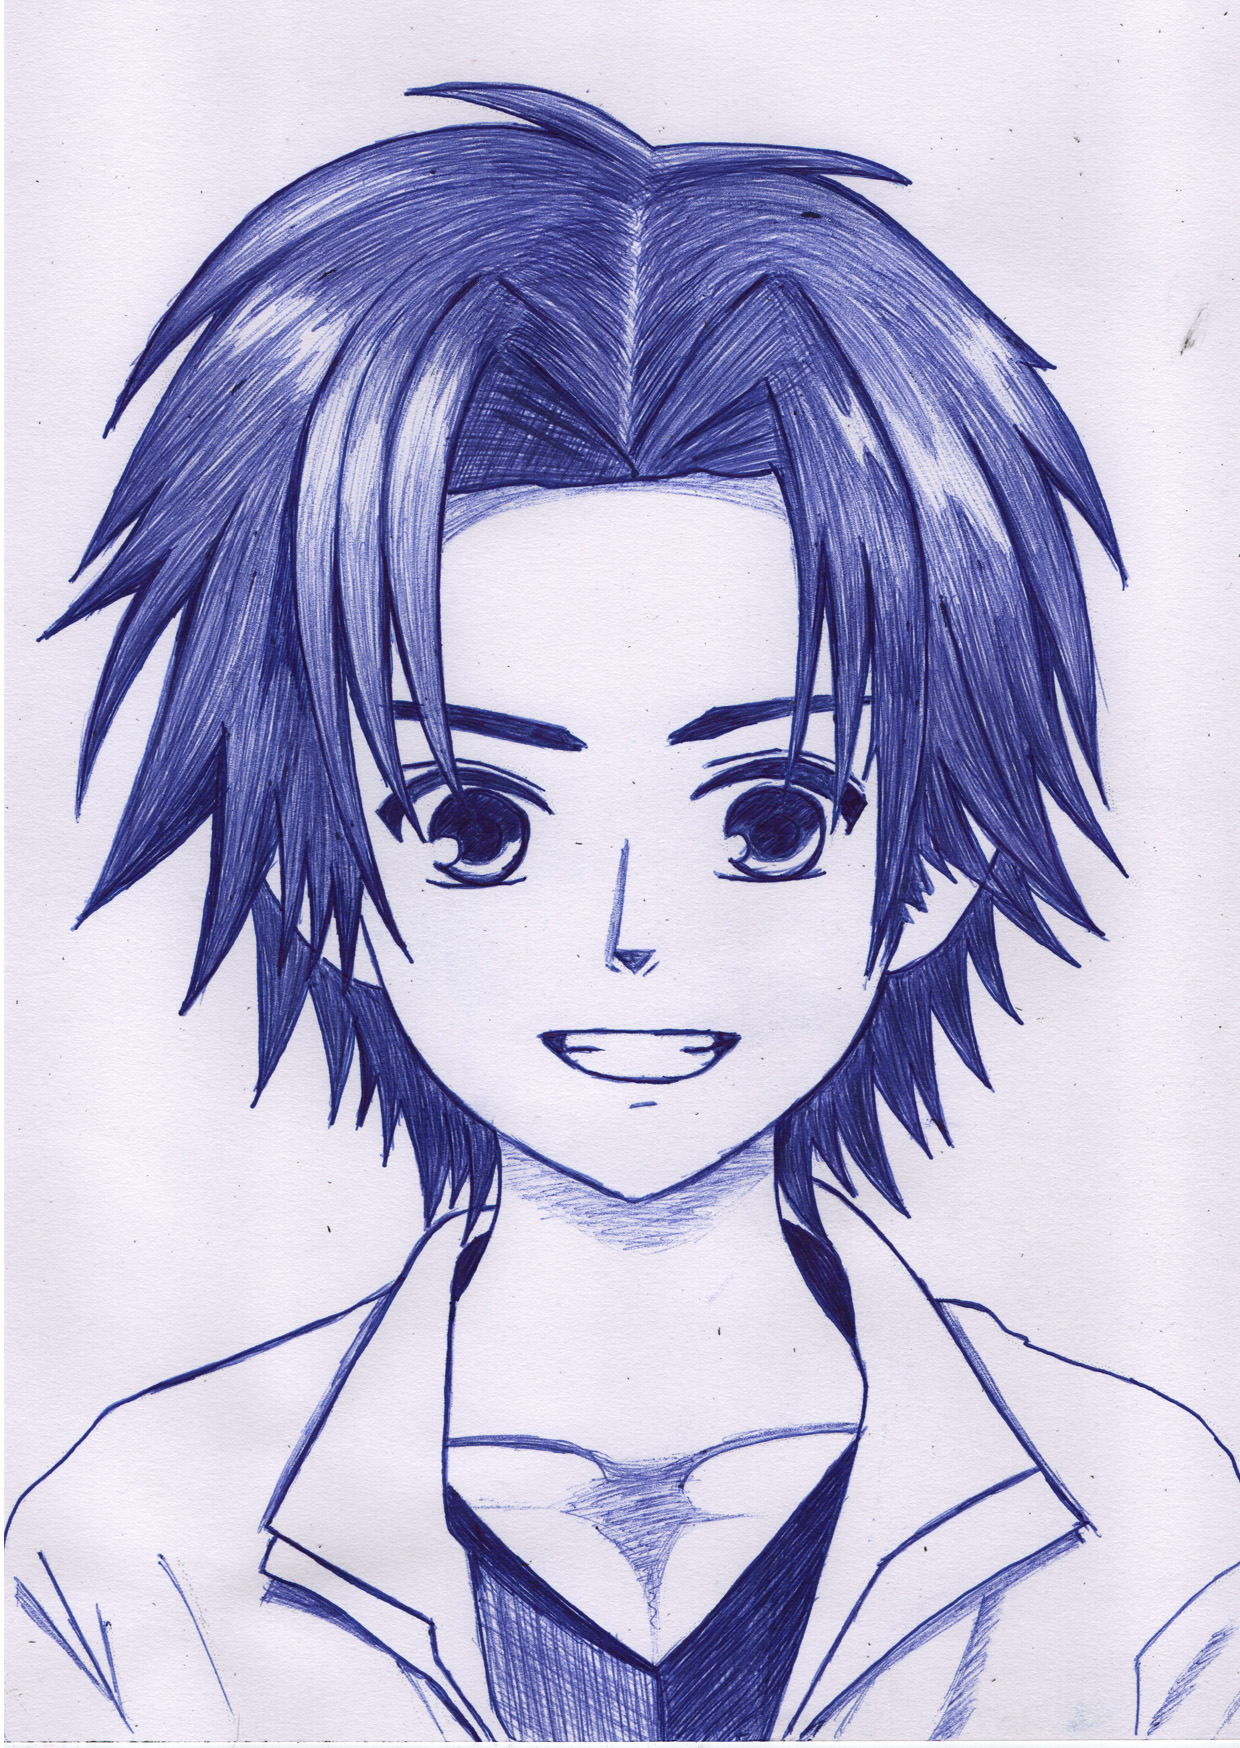 Drawing Cute Anime Neko Girl by DrawingTimeWithMe on DeviantArt